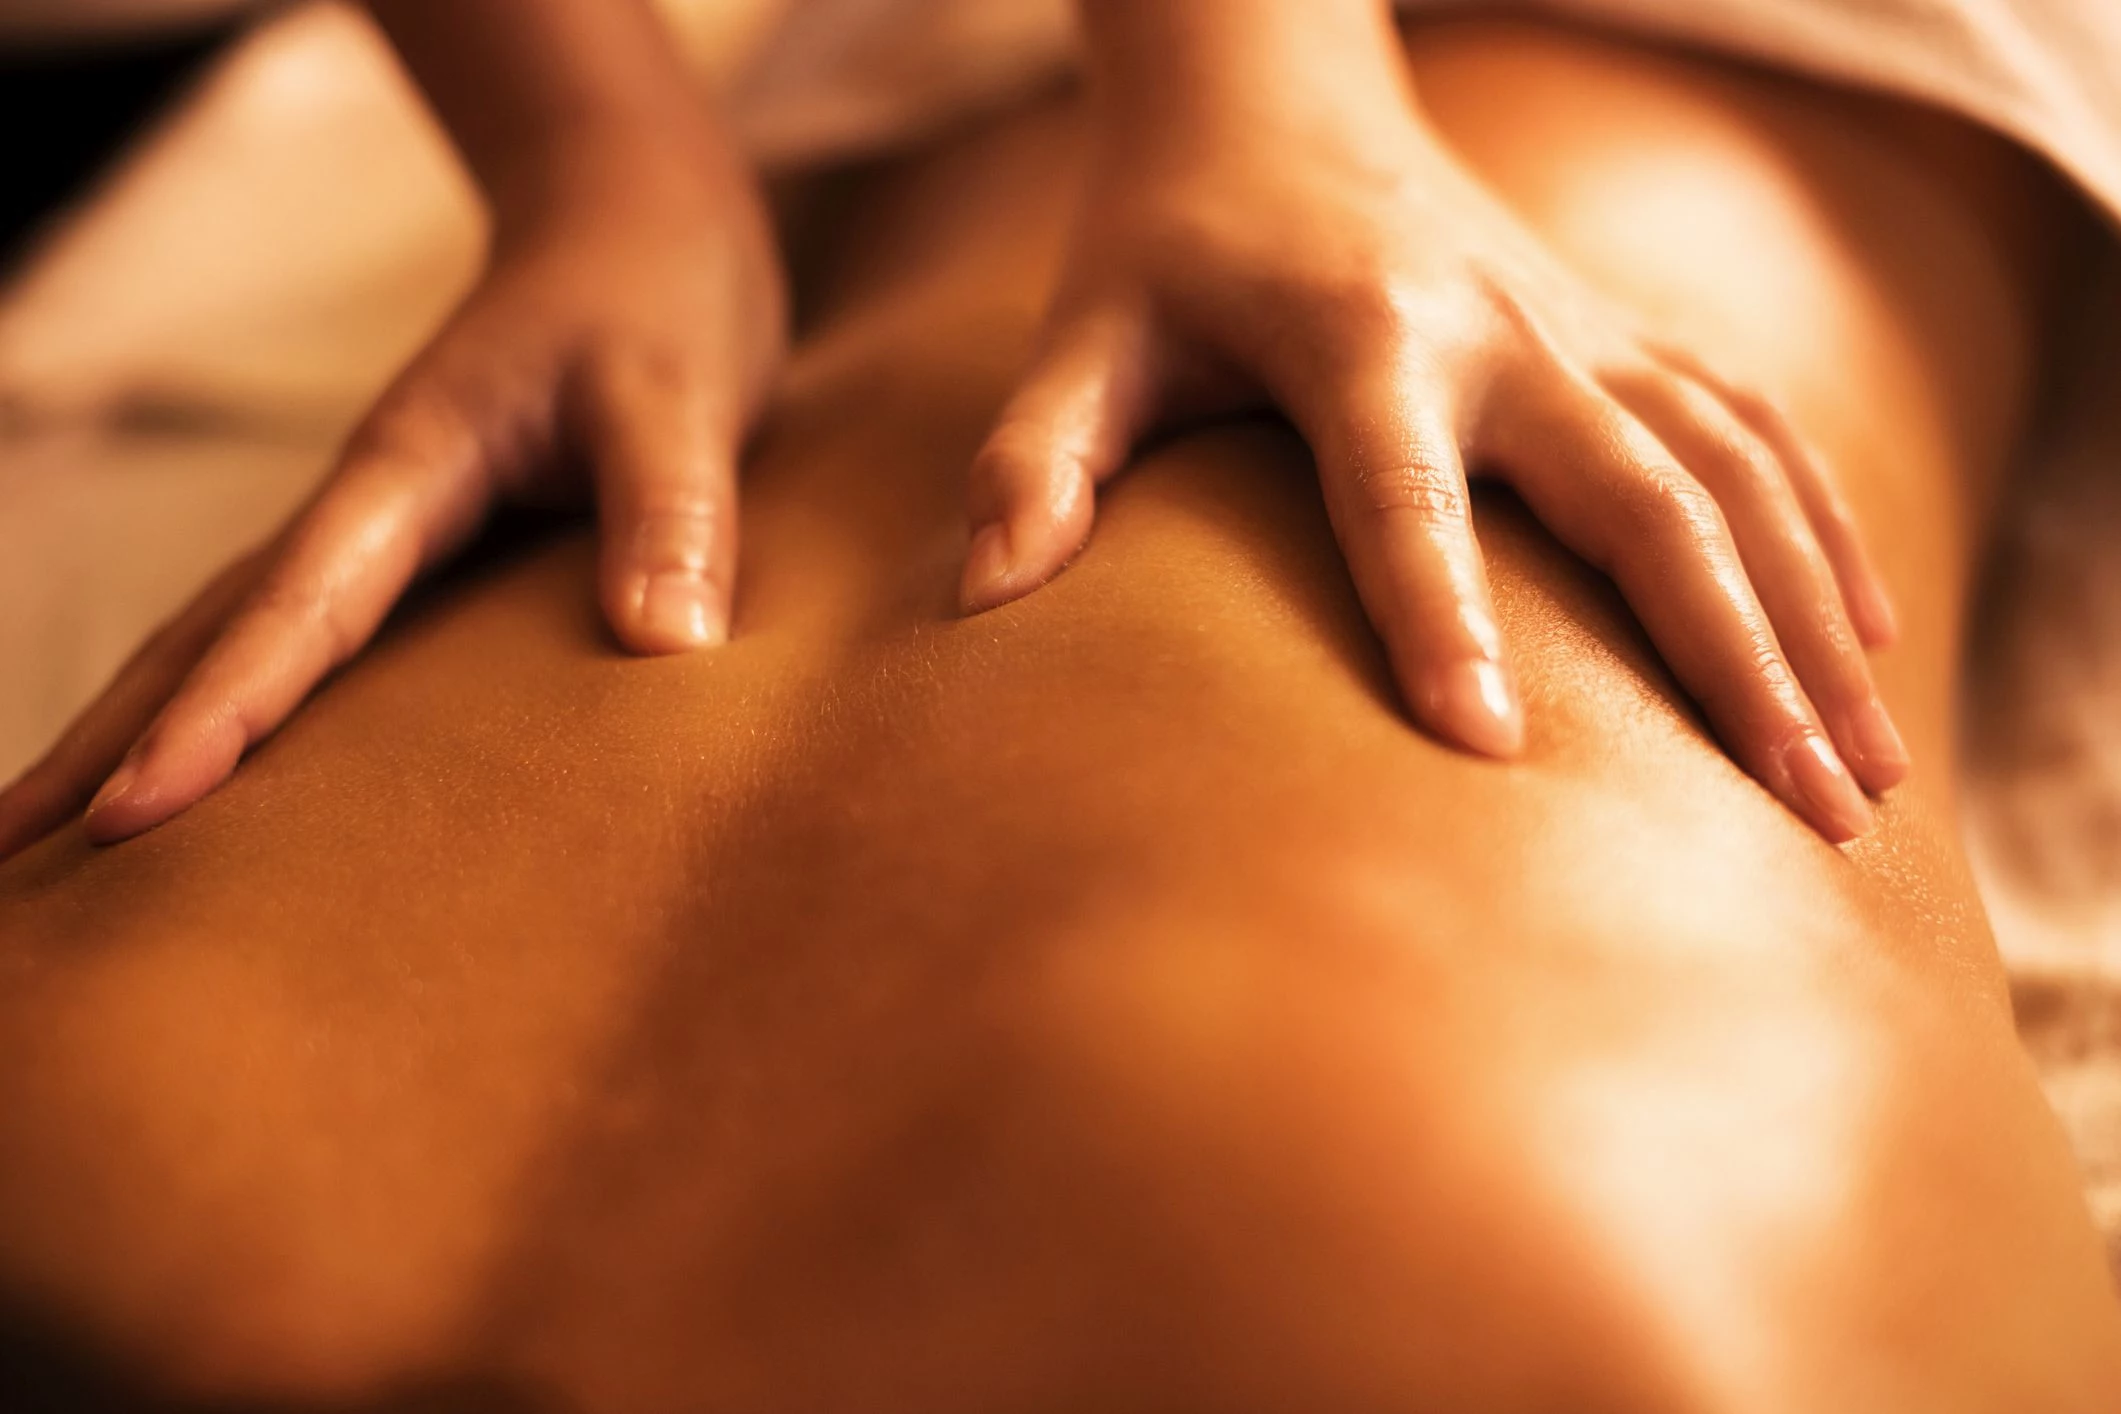 Minnetonka Massage Parlor